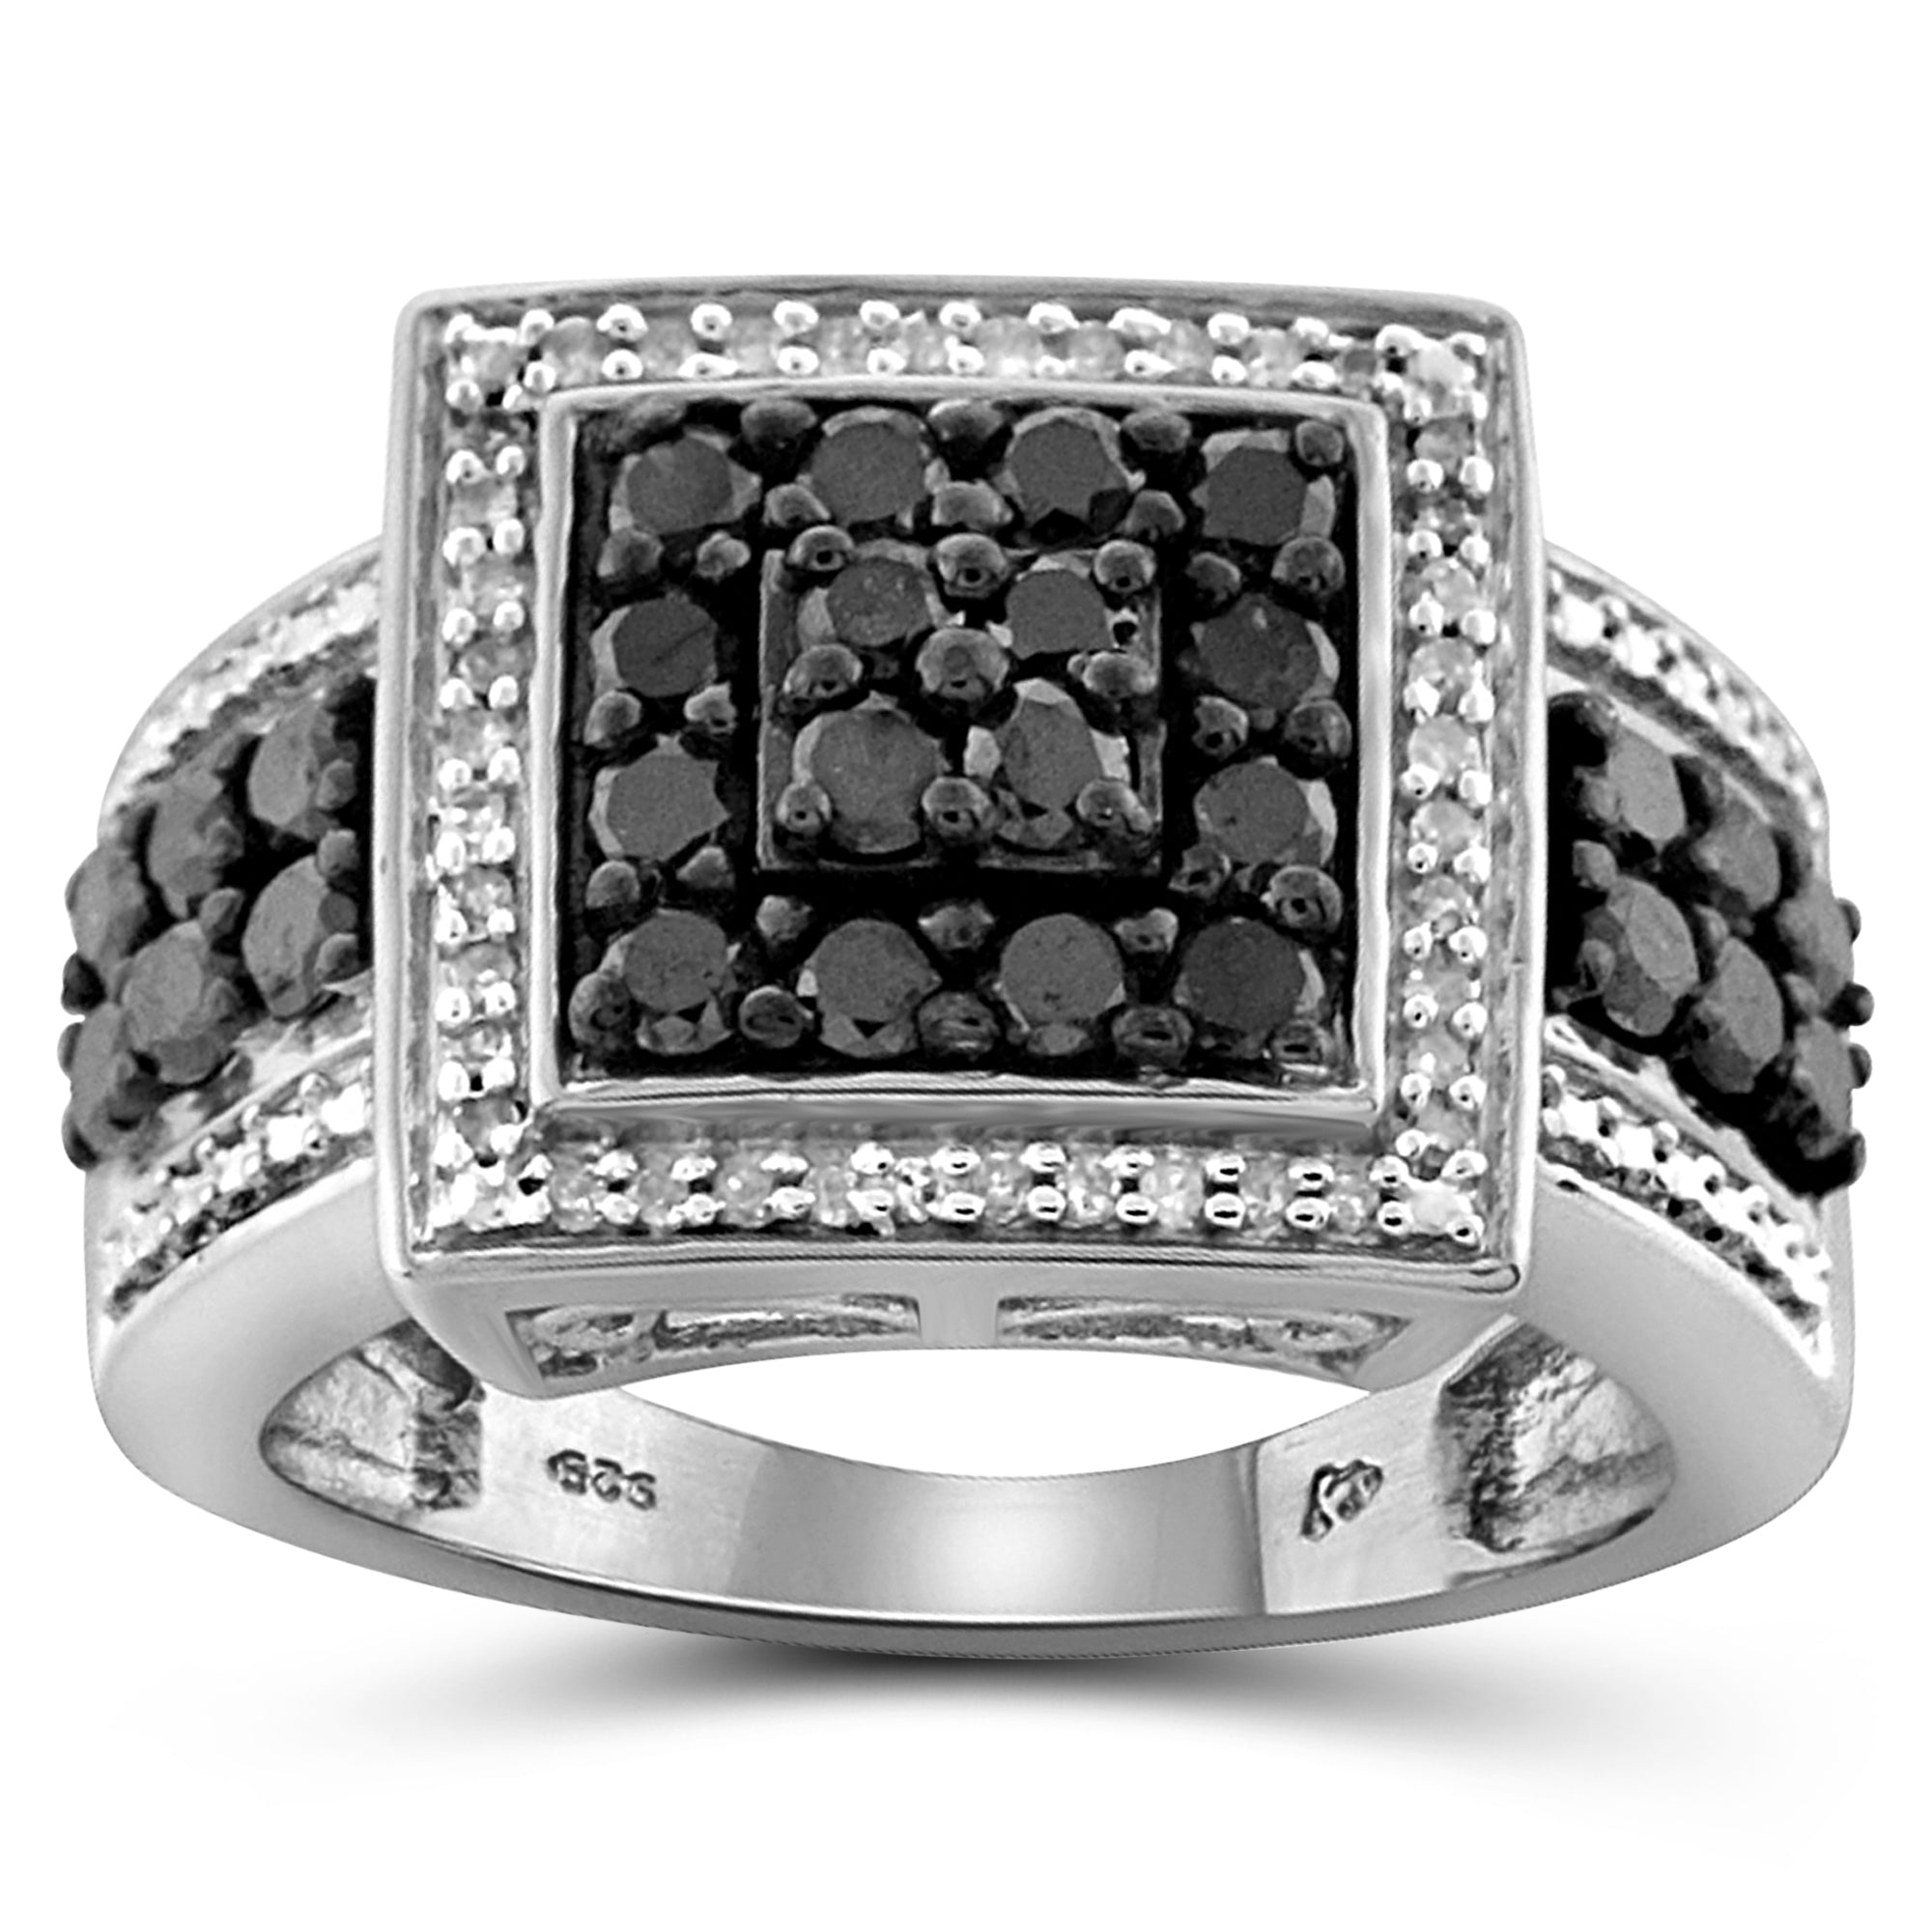 Kobelli Mens Ring Square Black Diamond Pave 1 Carat (ctw) in 10k White  Gold, Size 8.5, White Gold|Amazon.com